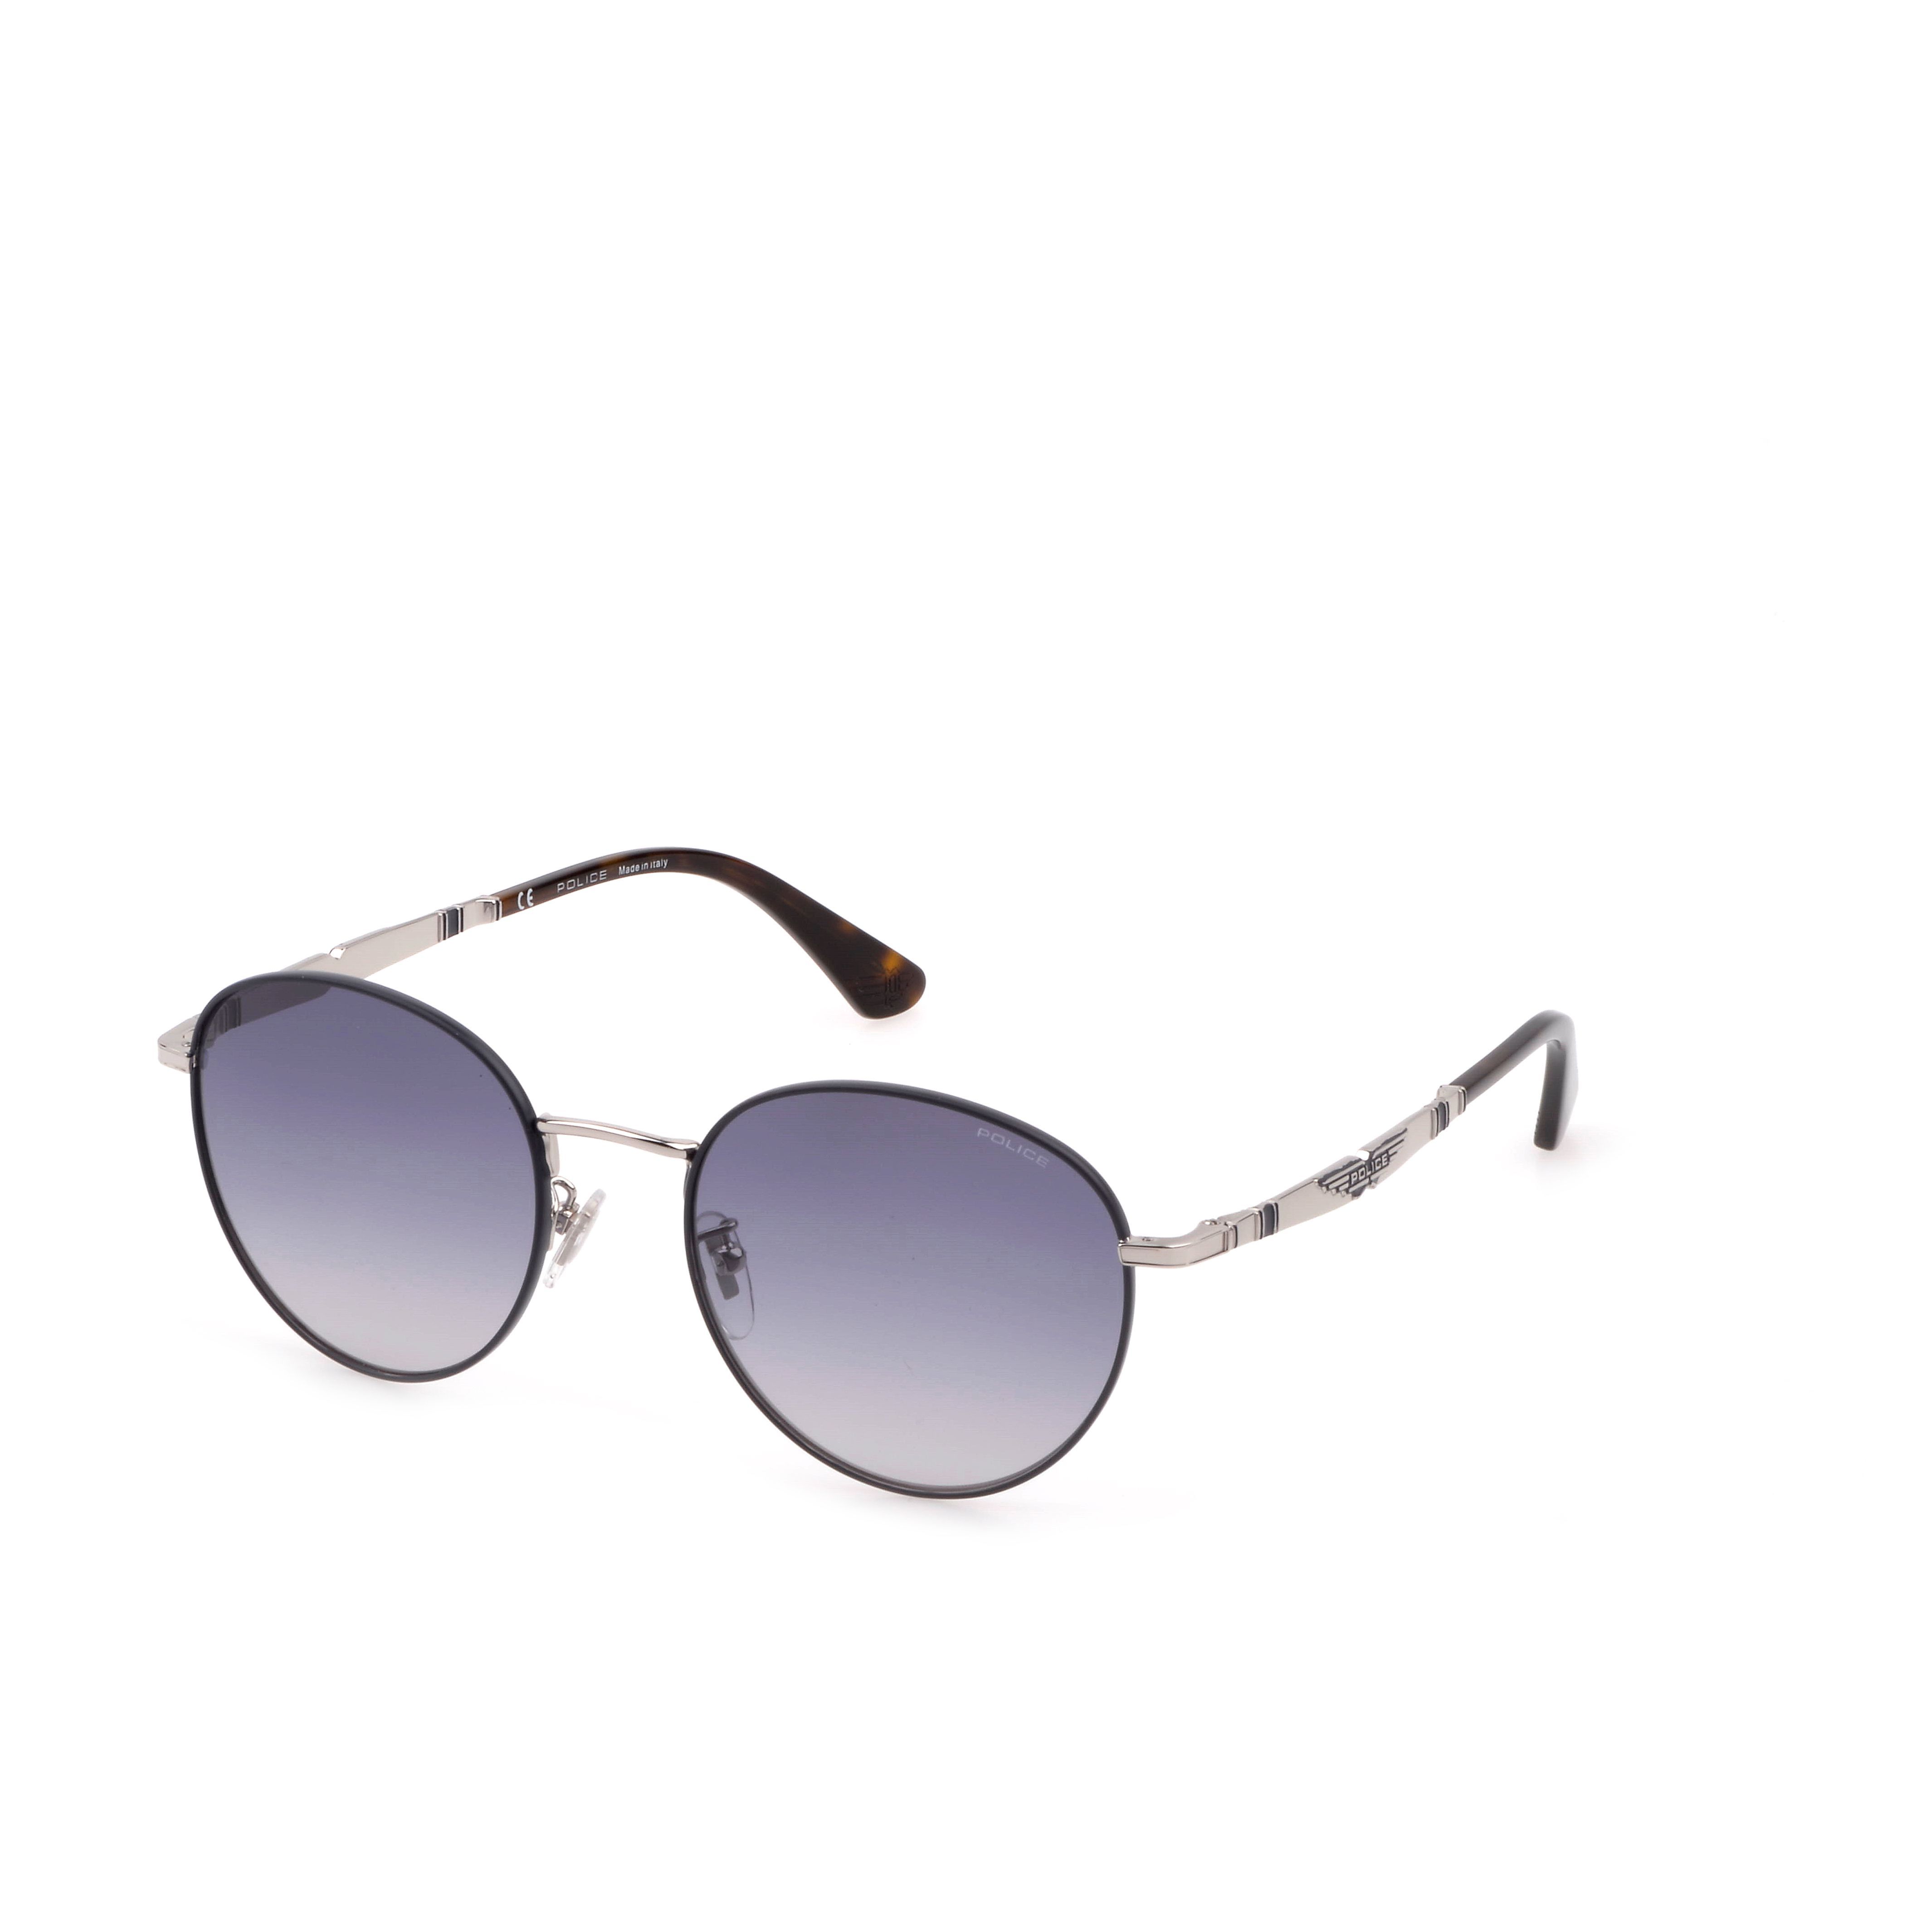 SPLE07 Round Sunglasses E70 - size 52